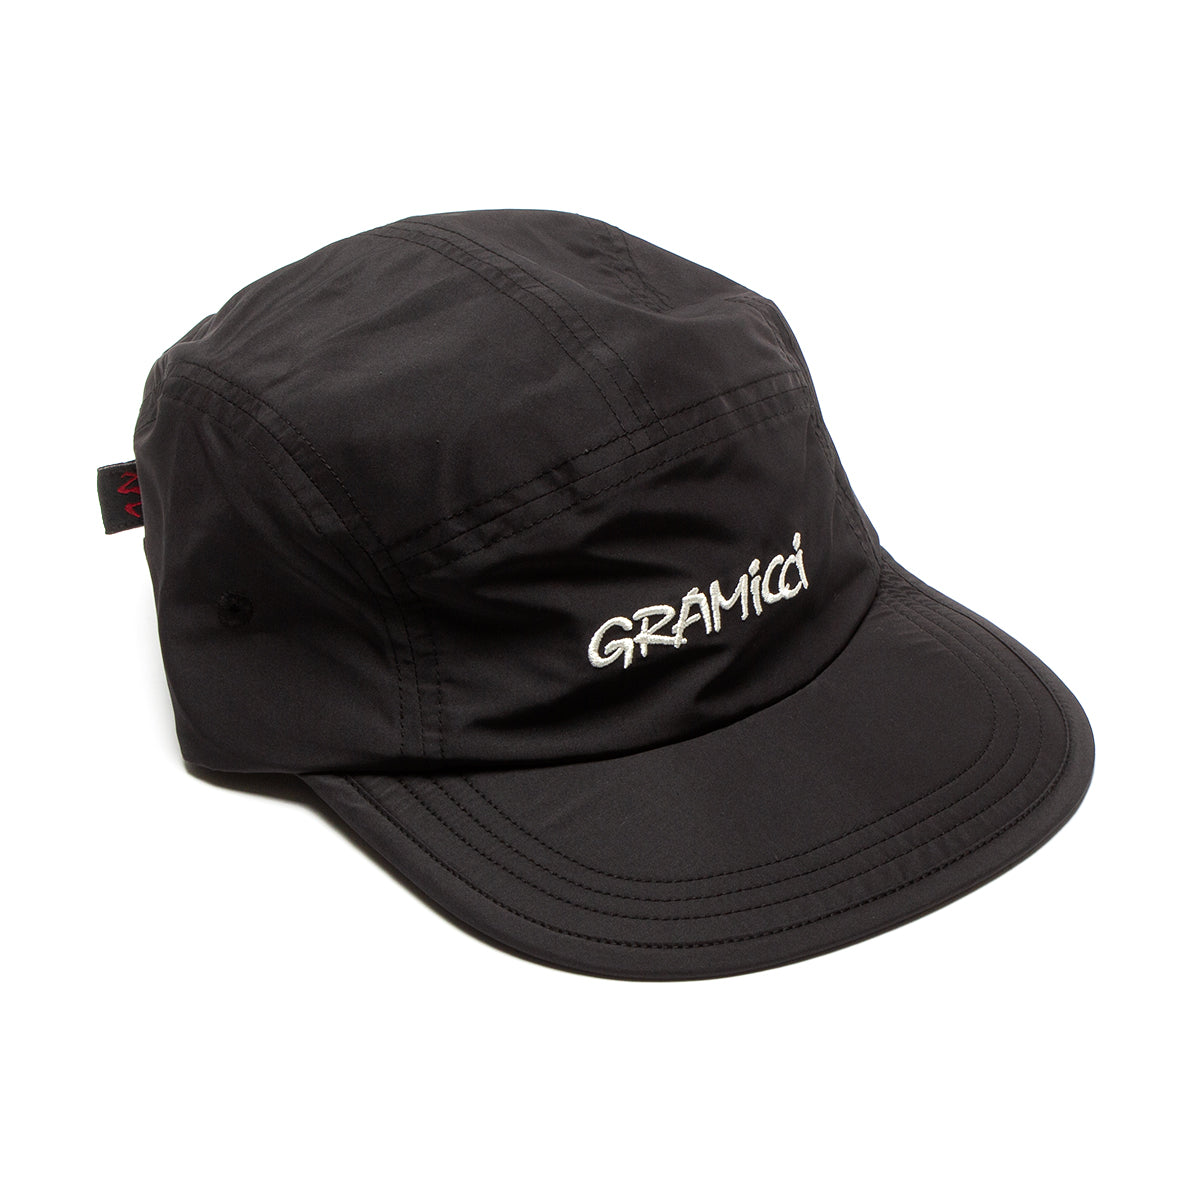 Gramicci Shell Jet Cap Style # G2SA-029 Color : Black